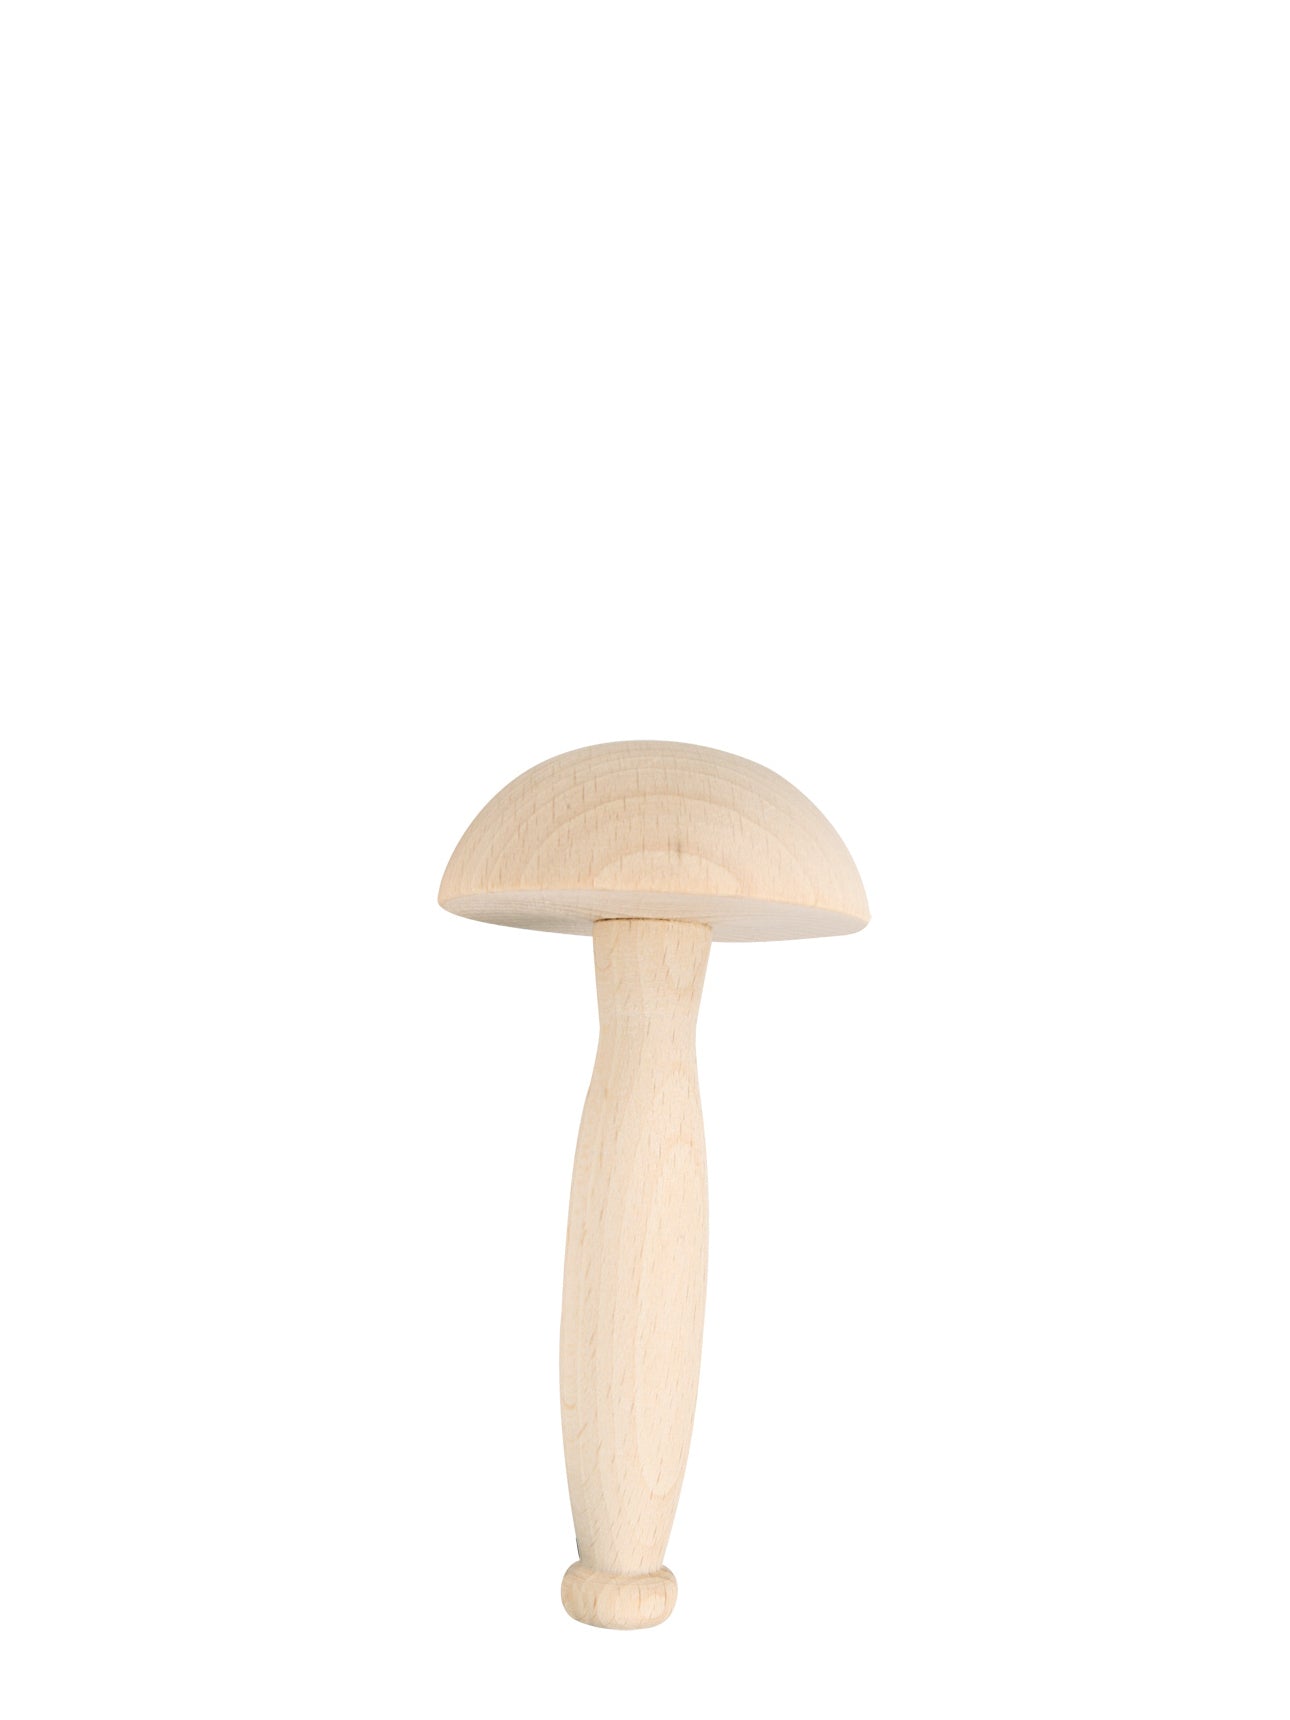 Darning mushroom, beechwood